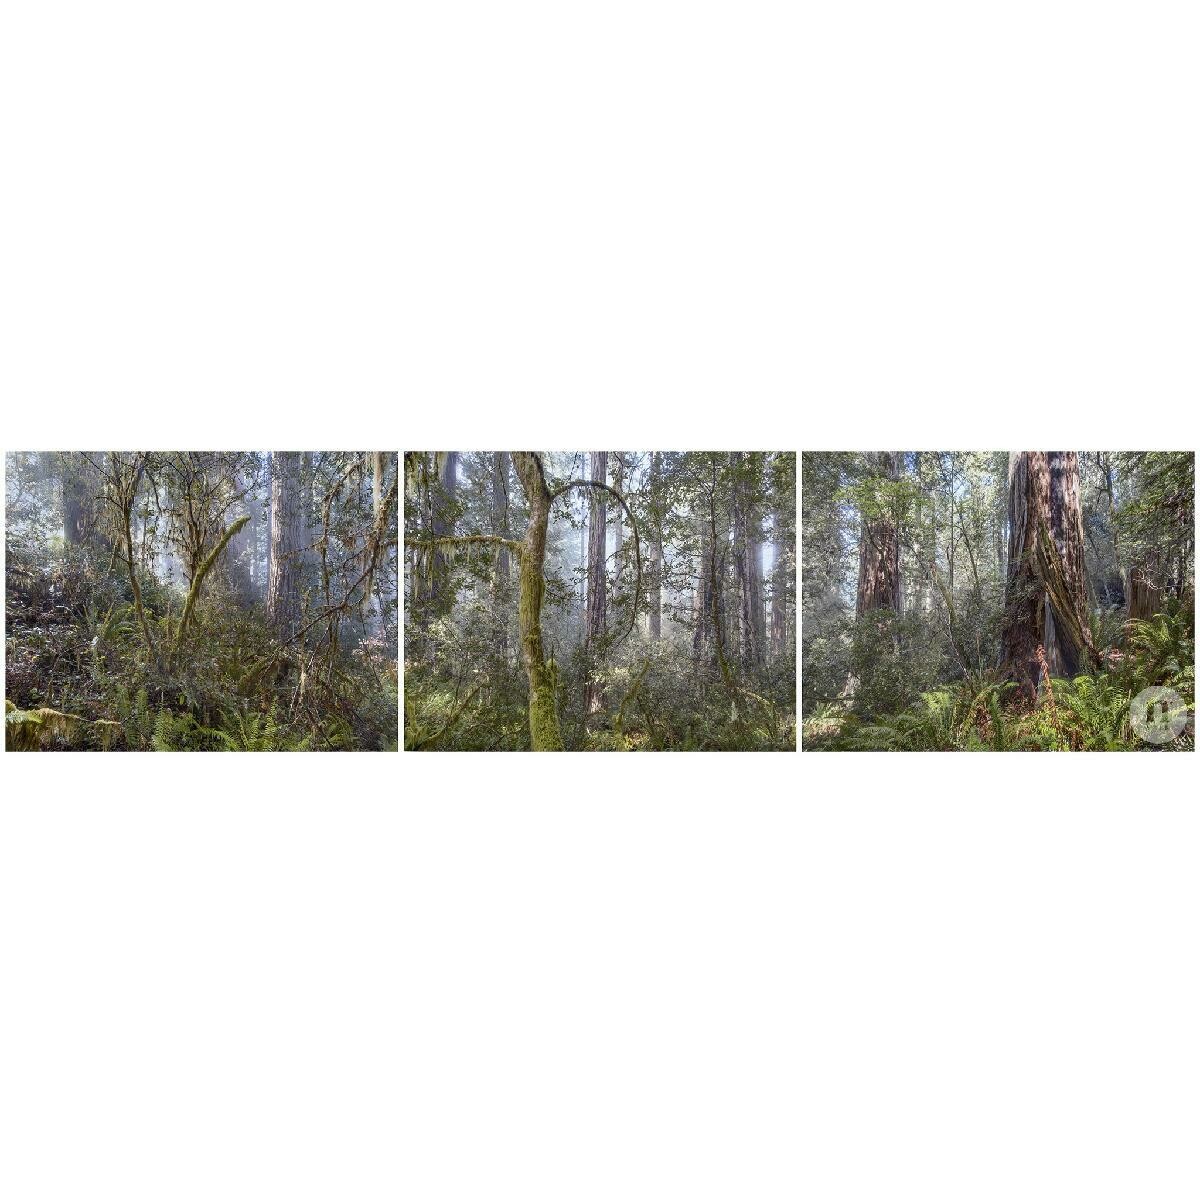 Lady Bird Grove - Redwoods National Park (12